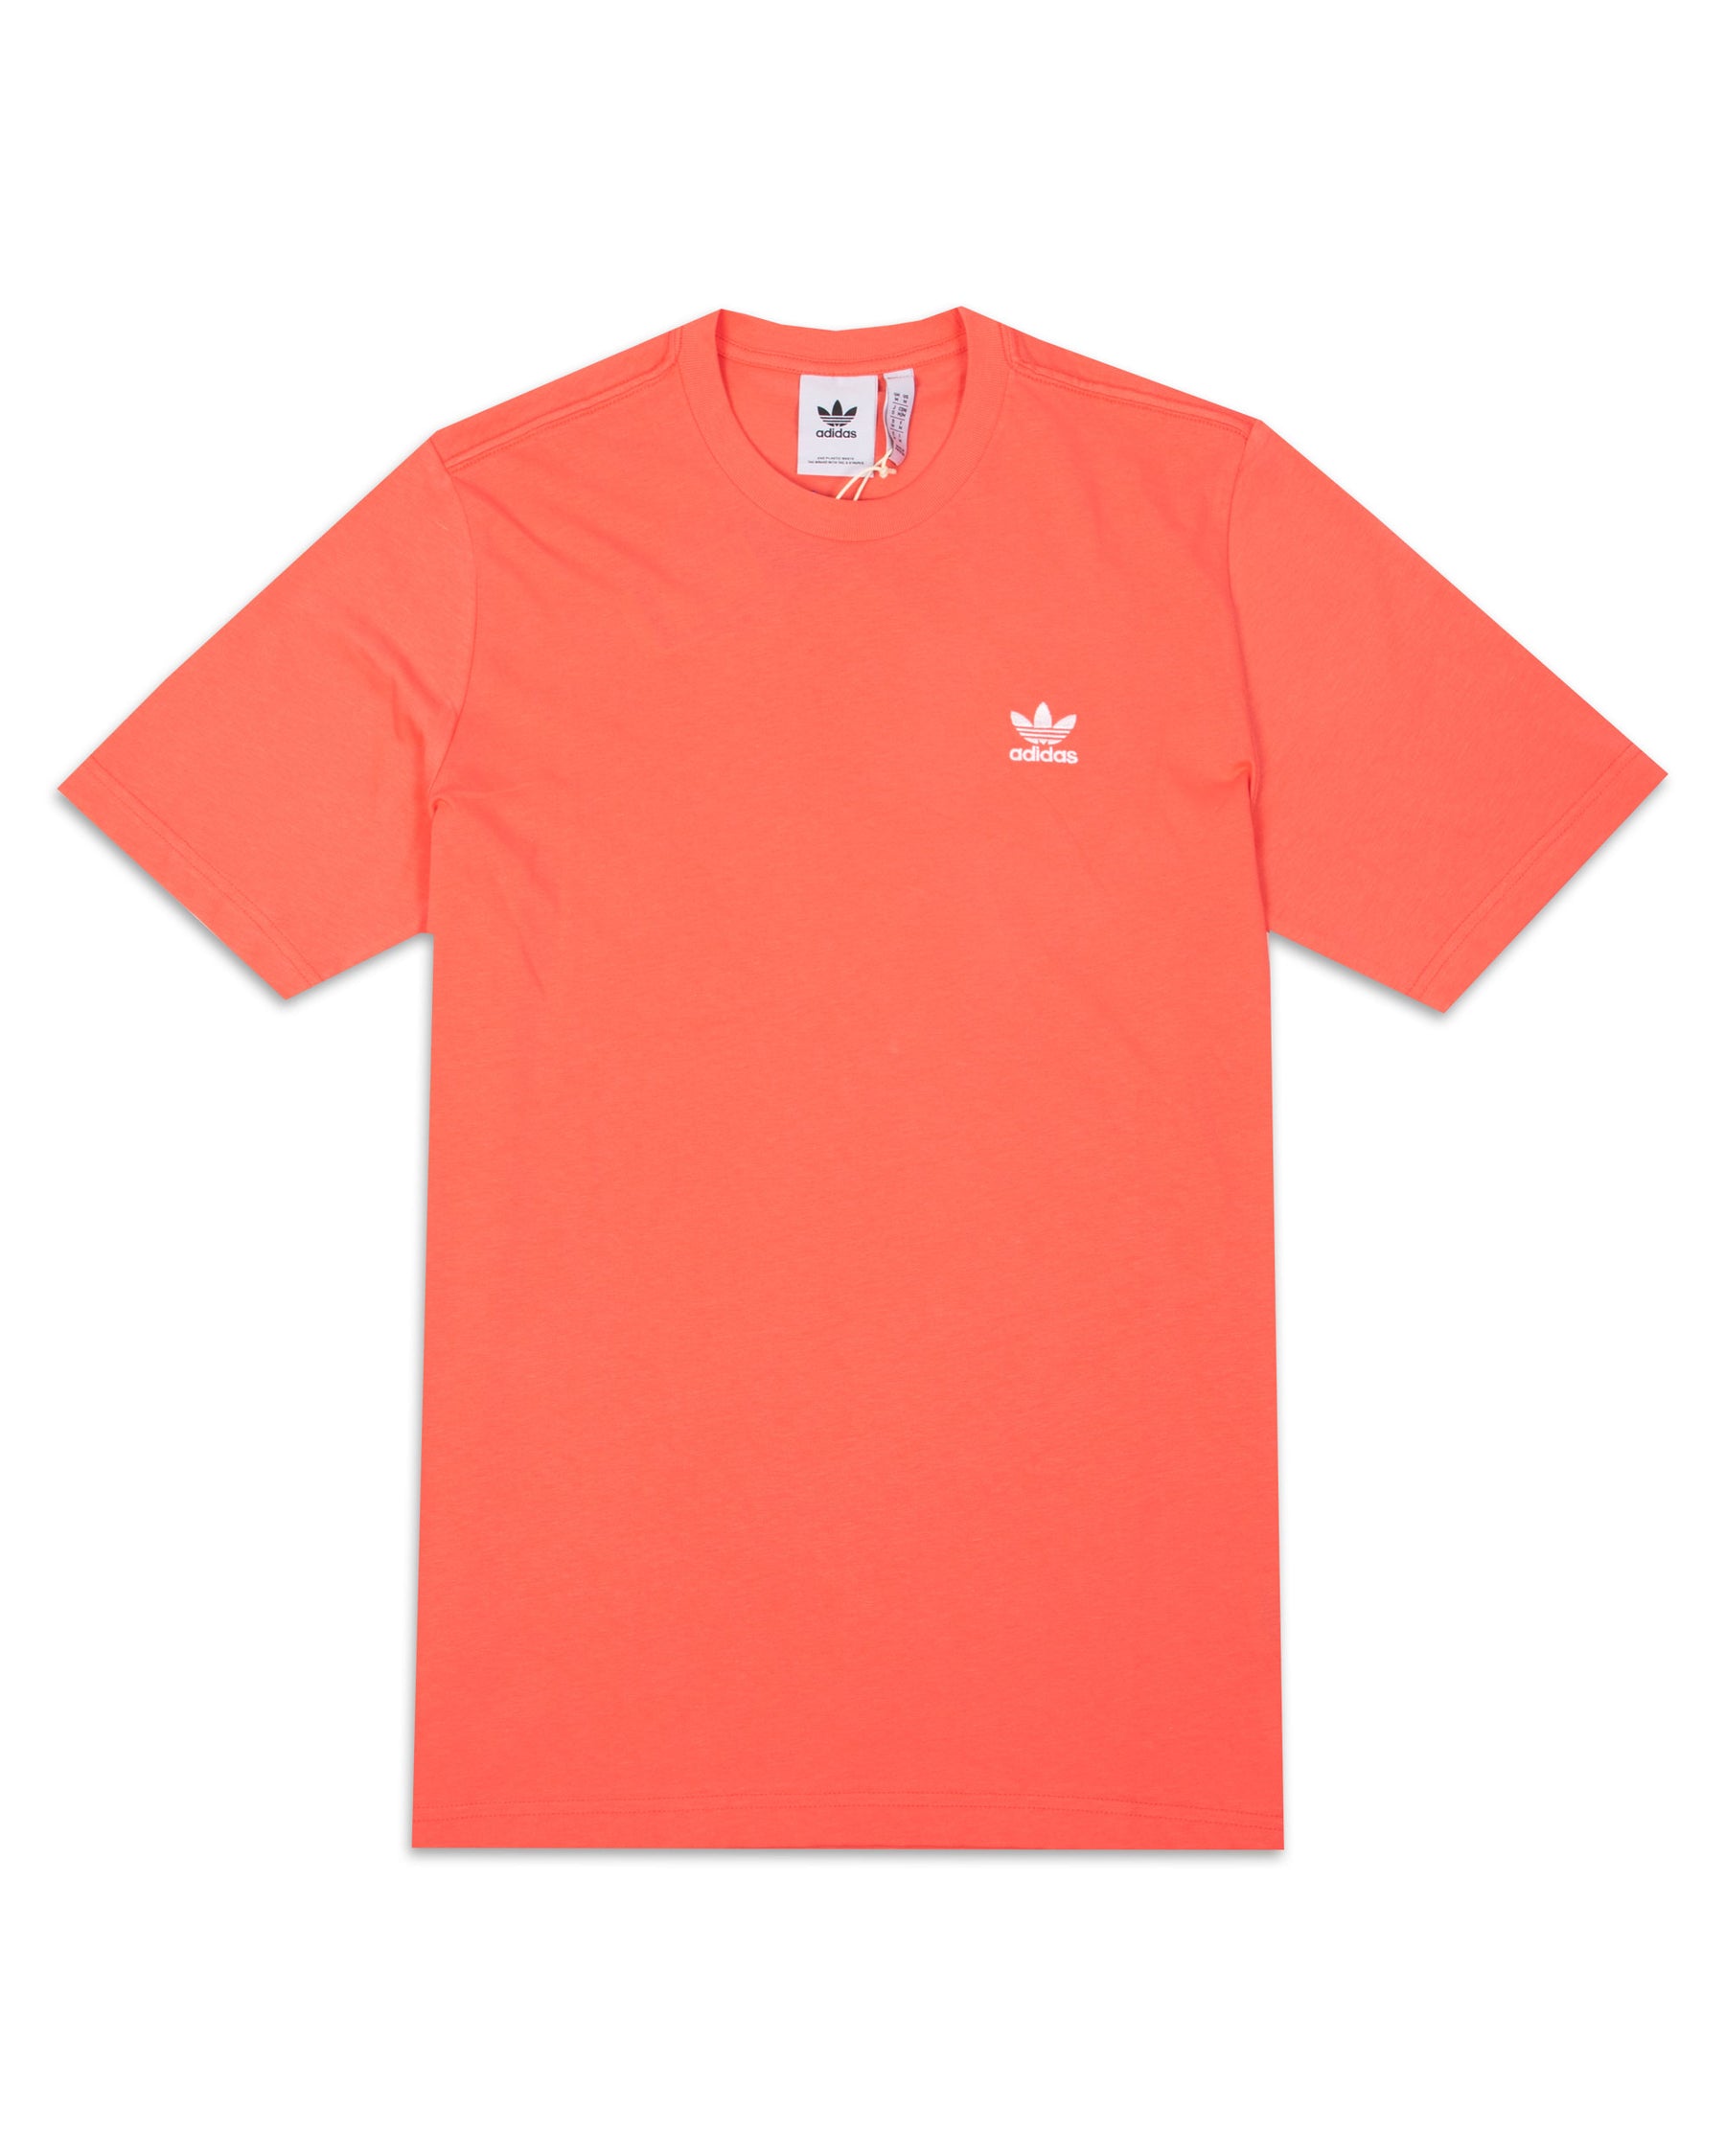 T-Shirt Uomo Adidas Essential Corallo